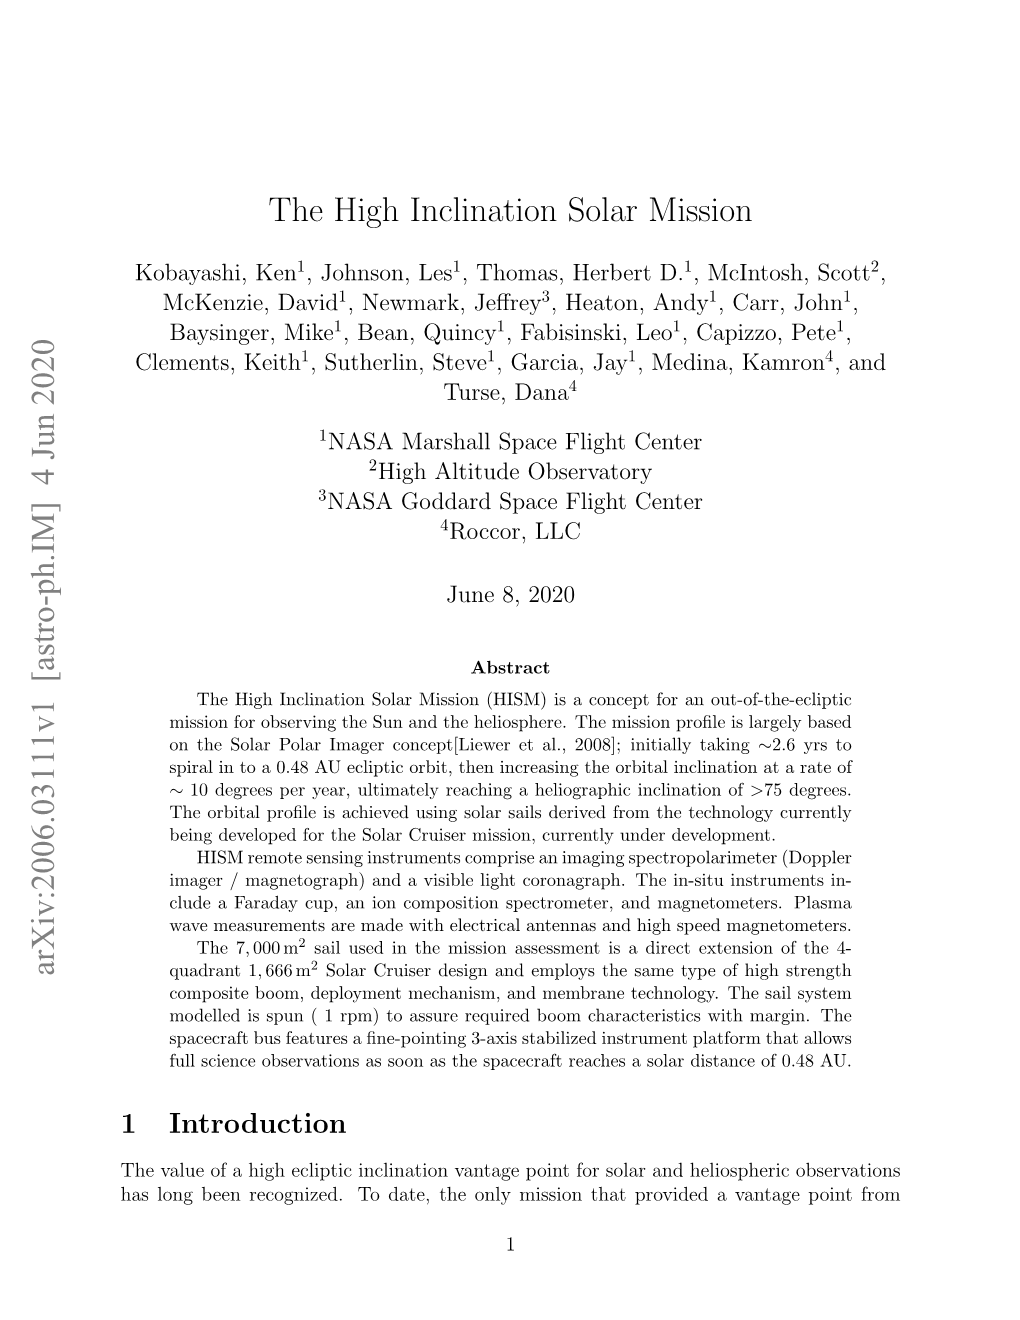 The High Inclination Solar Mission Arxiv:2006.03111V1